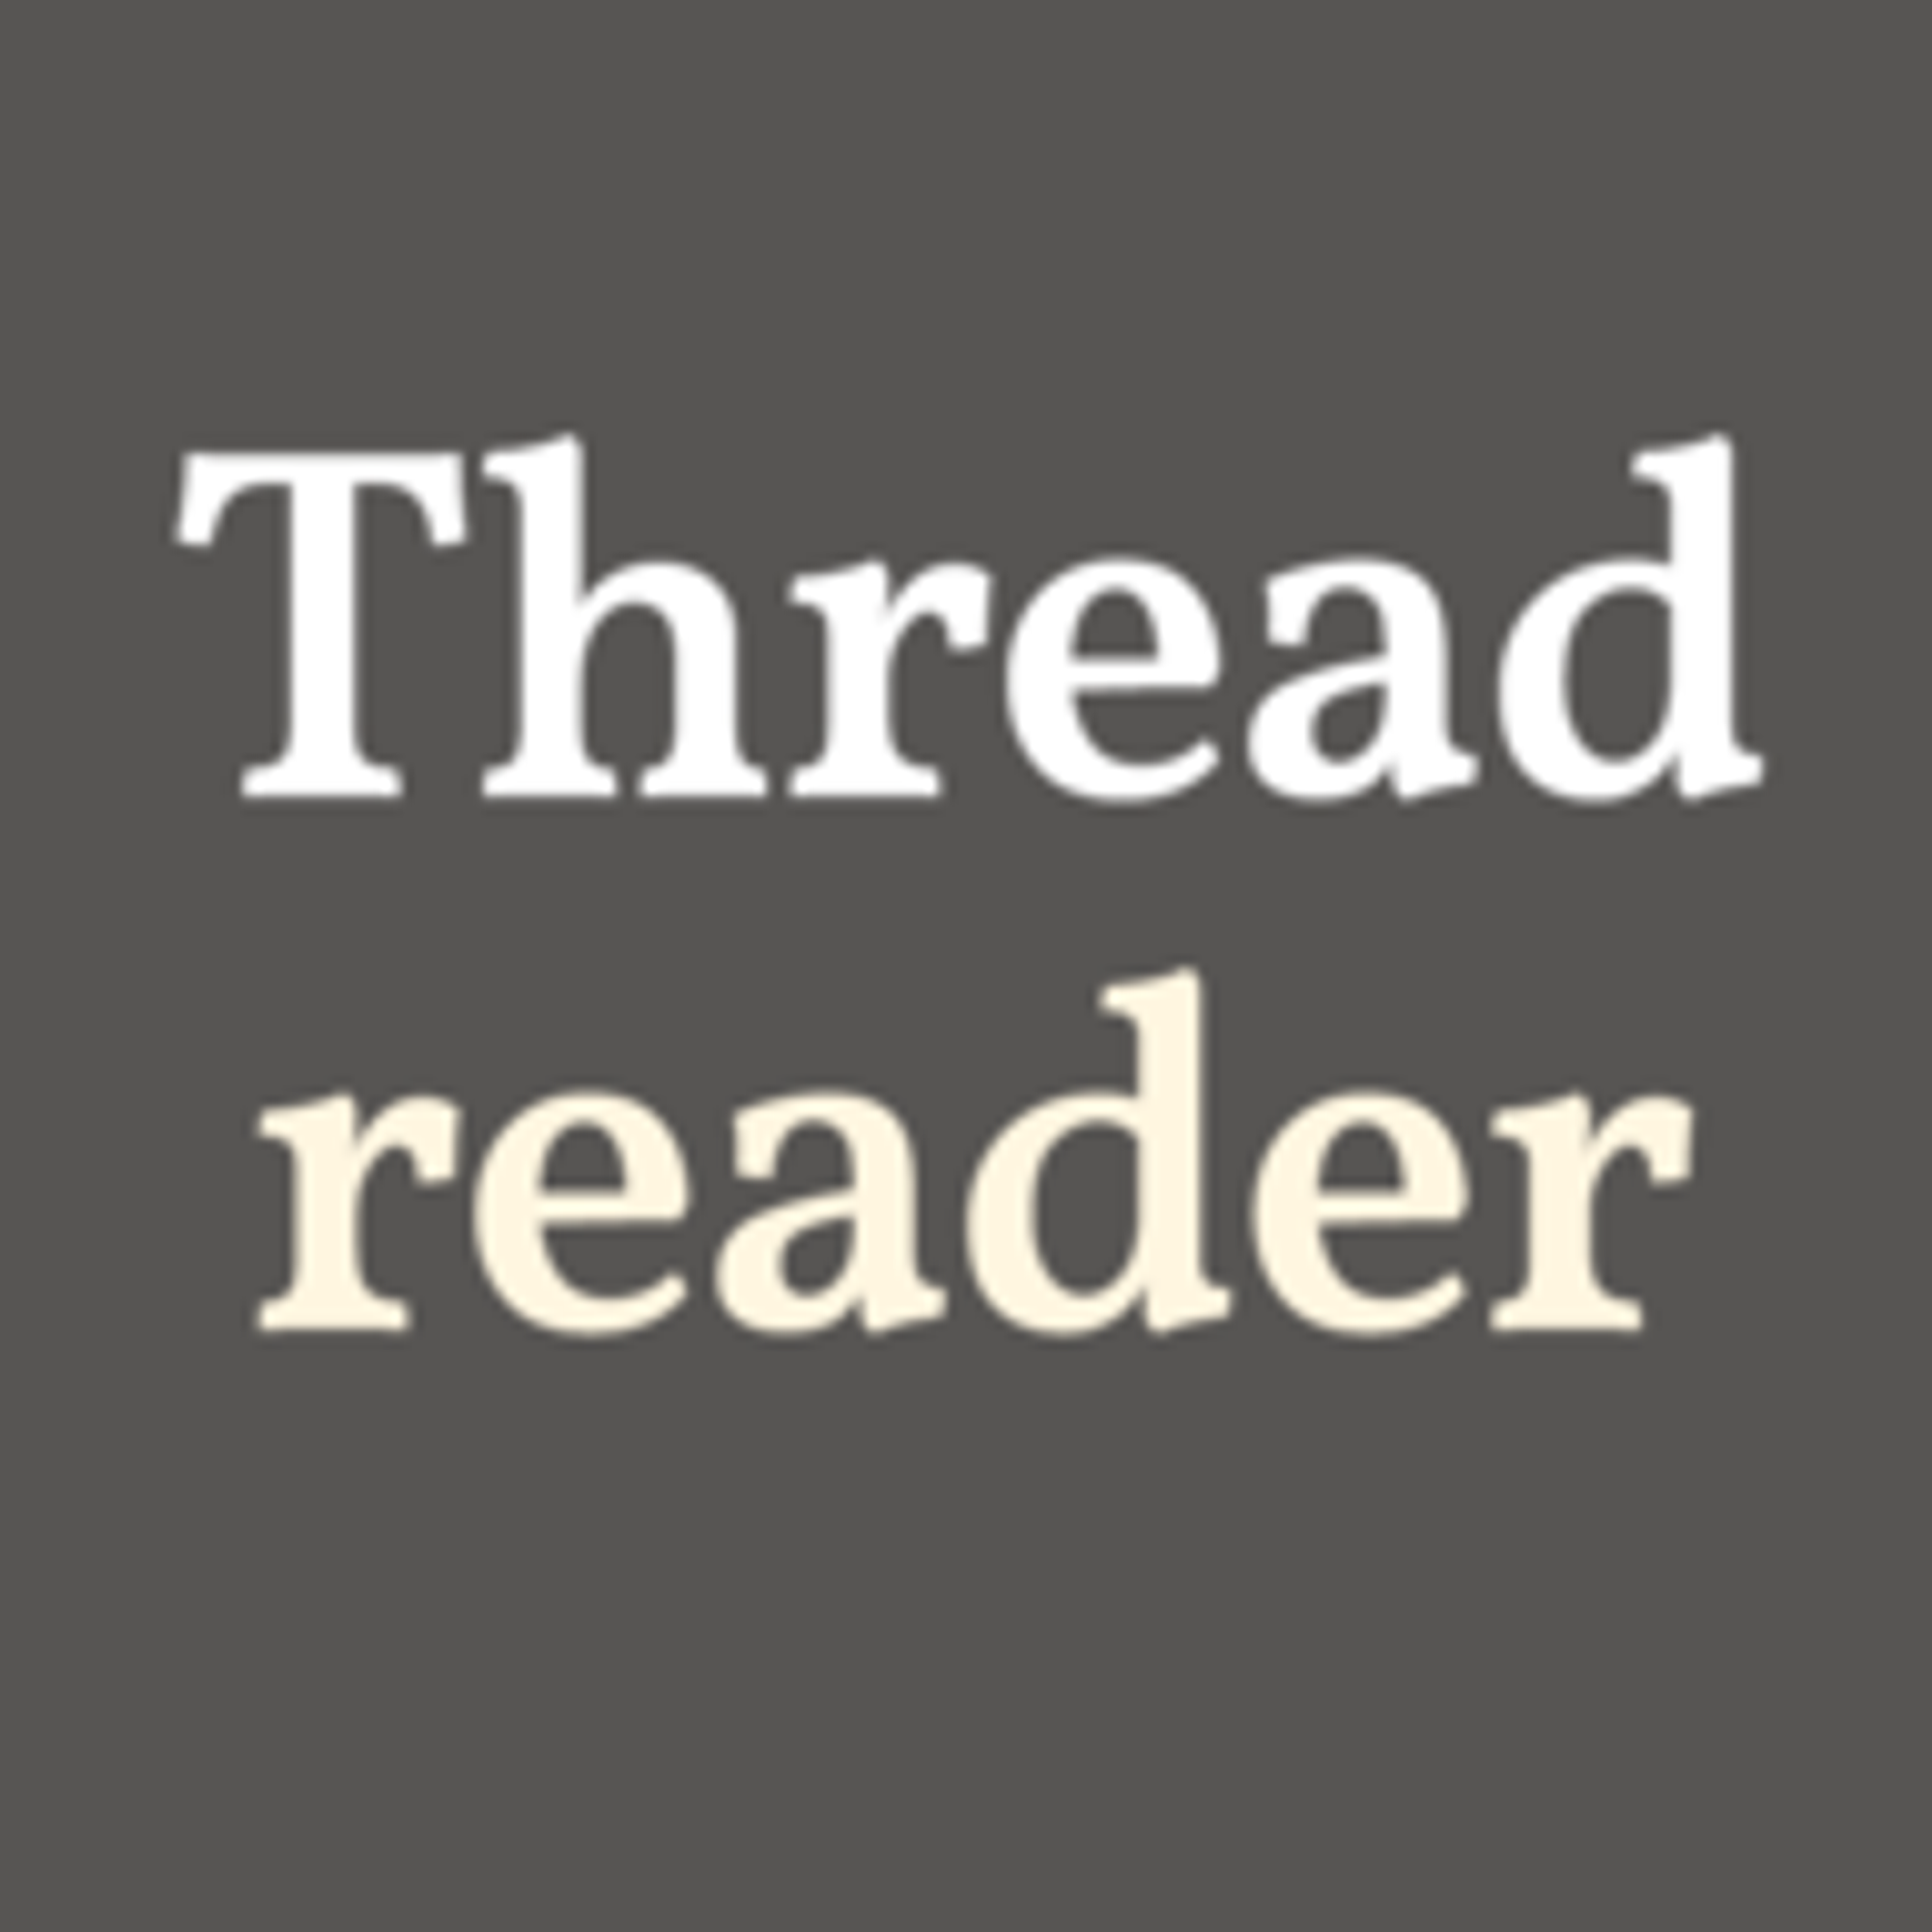 Thread by @nikitabier on Thread Reader App